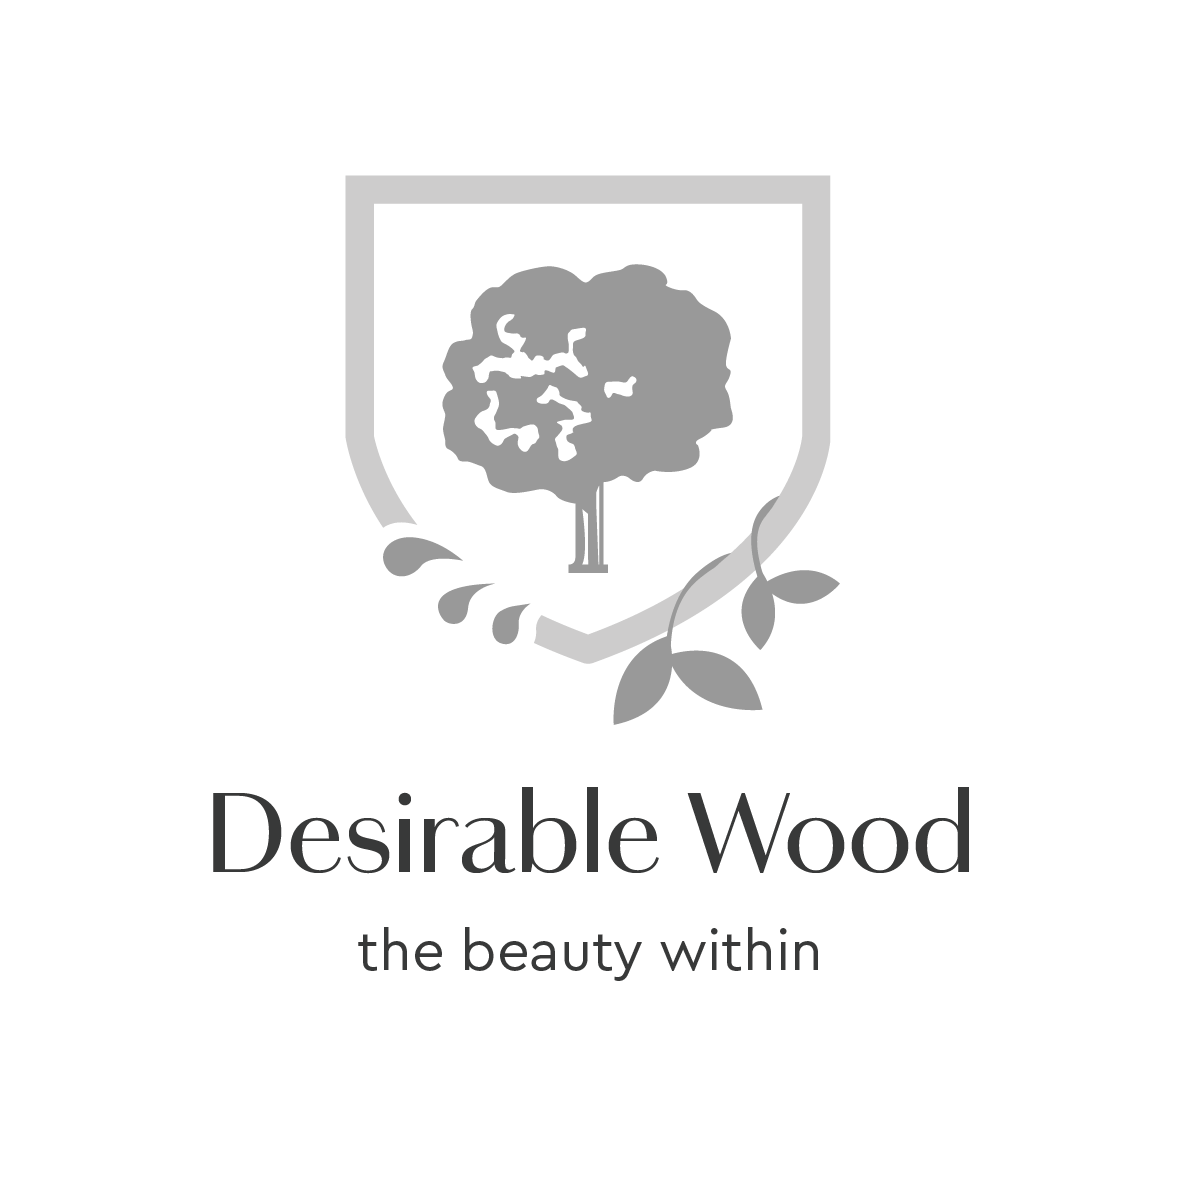 desirablewood